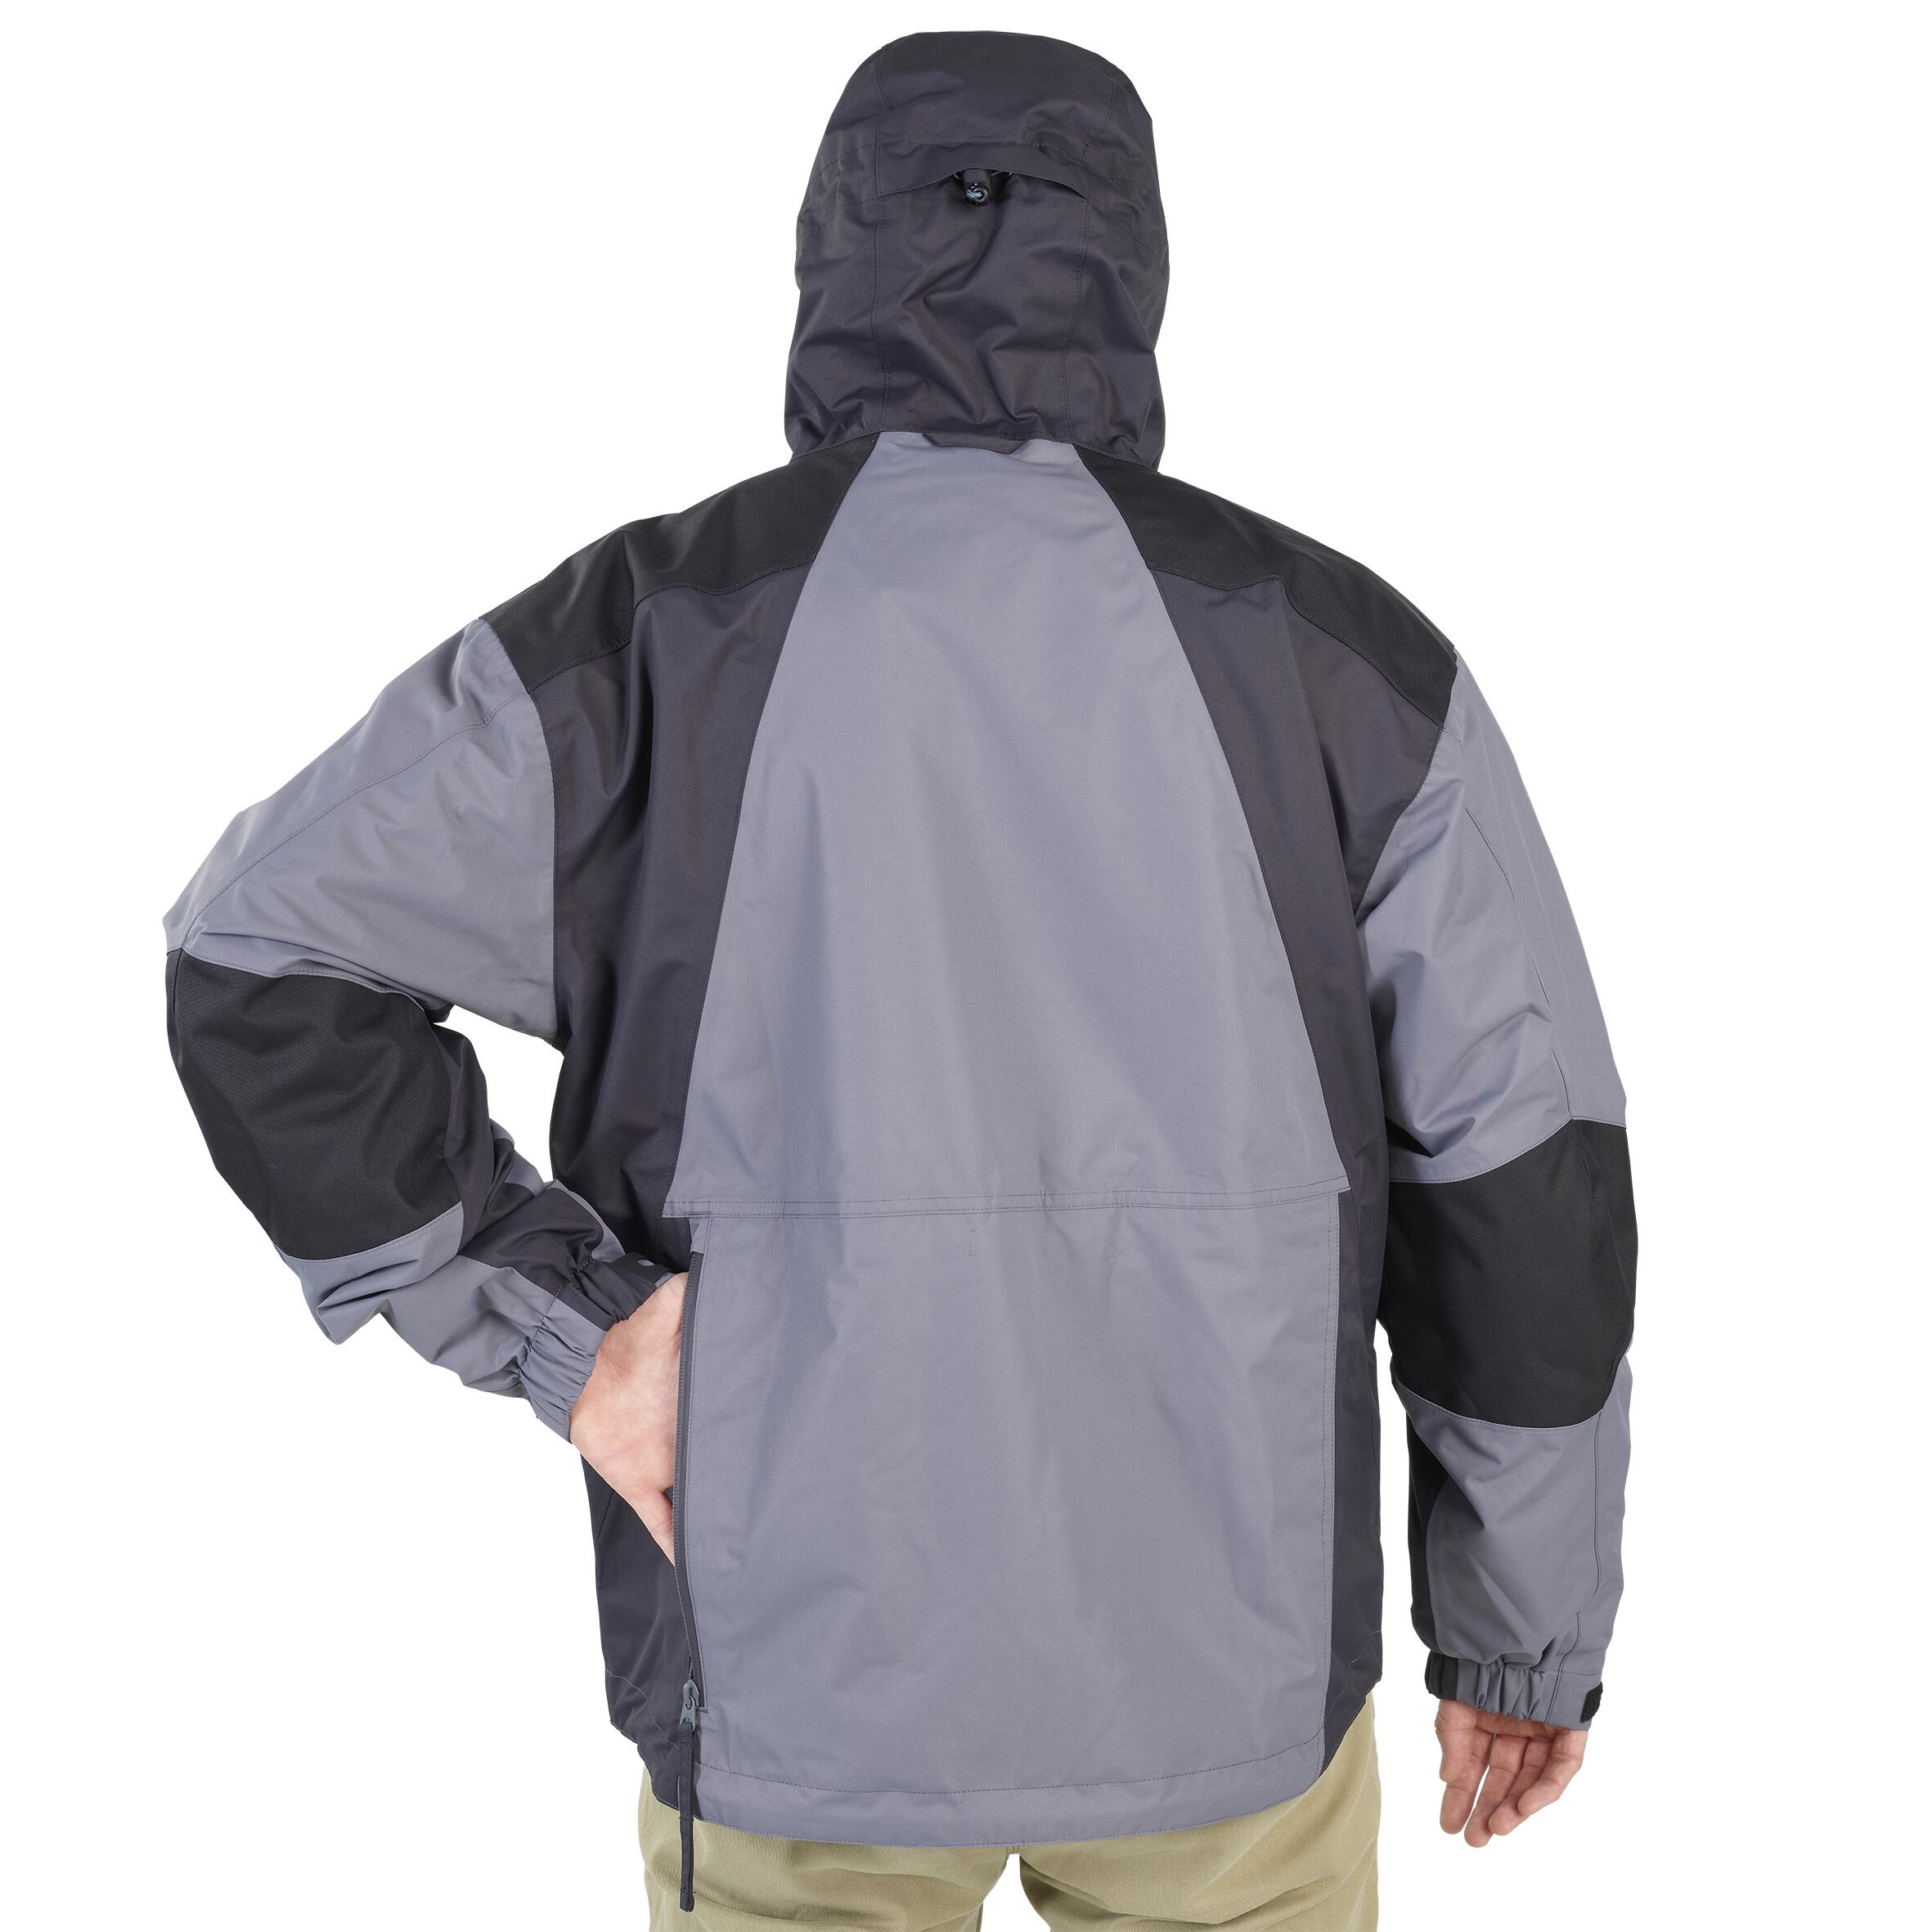 Fishing Waterproof Jacket - 500 Grey - Pebble grey, Light grey - Caperlan -  Decathlon